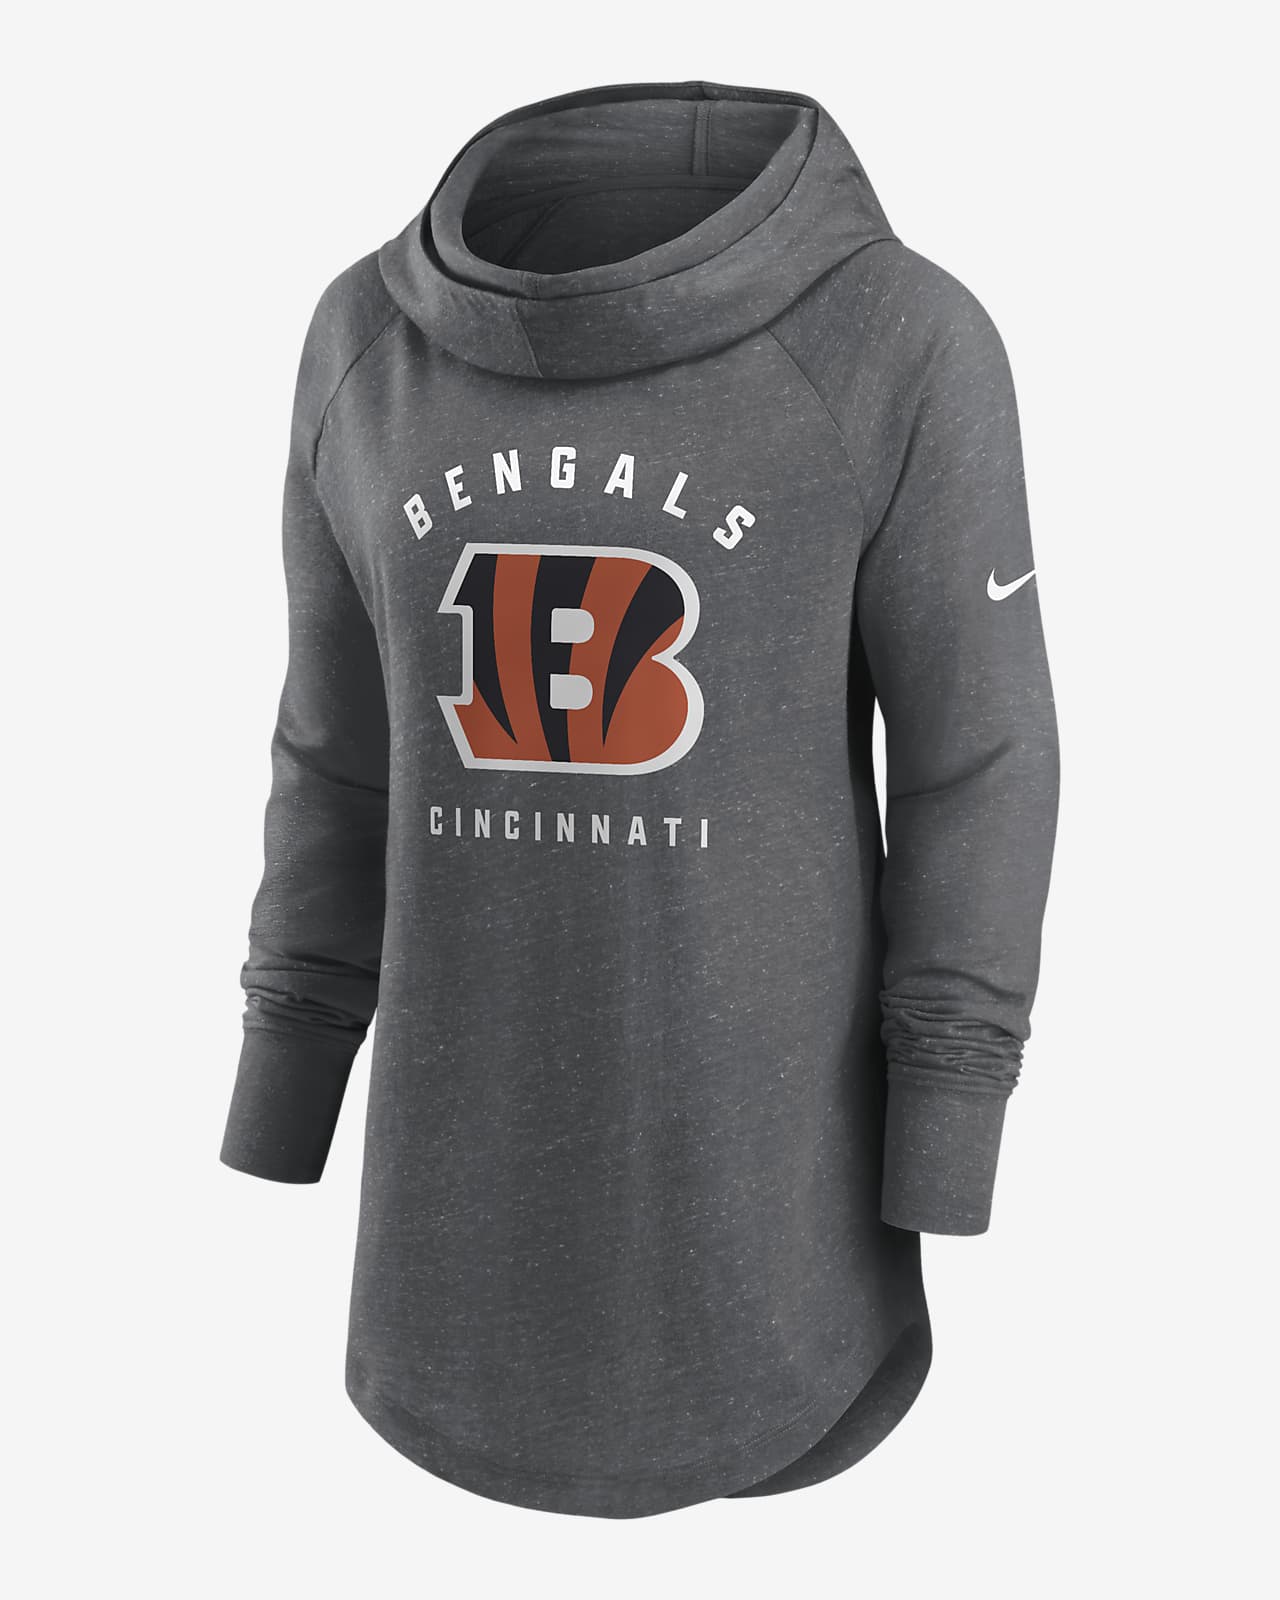 Nike Women's Team (NFL Cincinnati Bengals) Pullover Hoodie in Grey, Size: Small | NKZE07F9A-06G